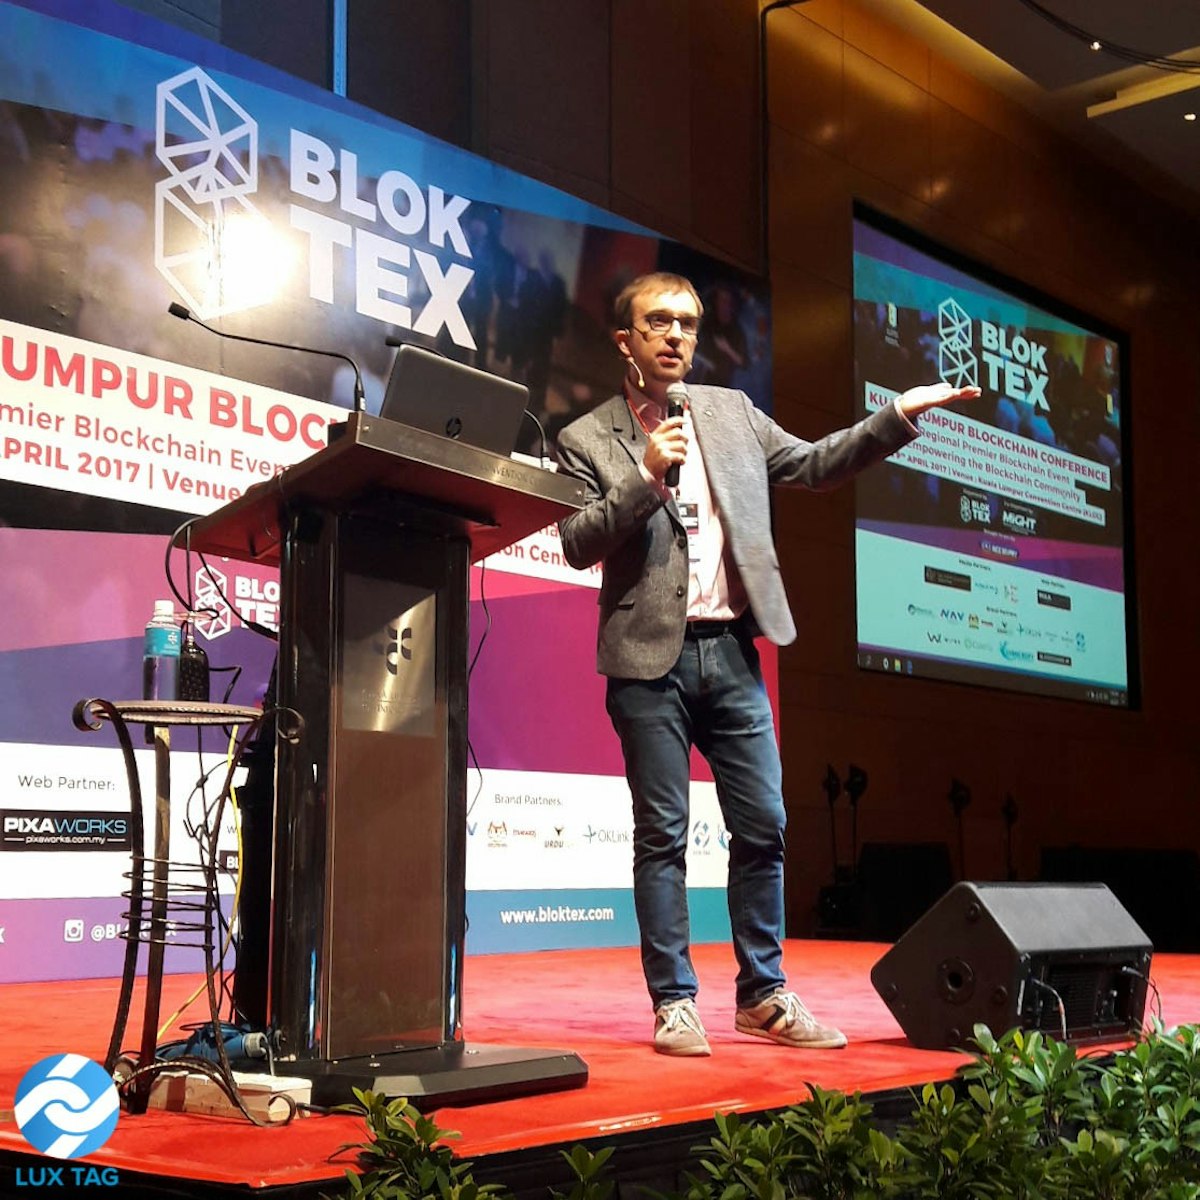 featured image - LuxTag powered by NEM Blockchain presents at Premier Regional Blockchain Event BLOKTEX 2017